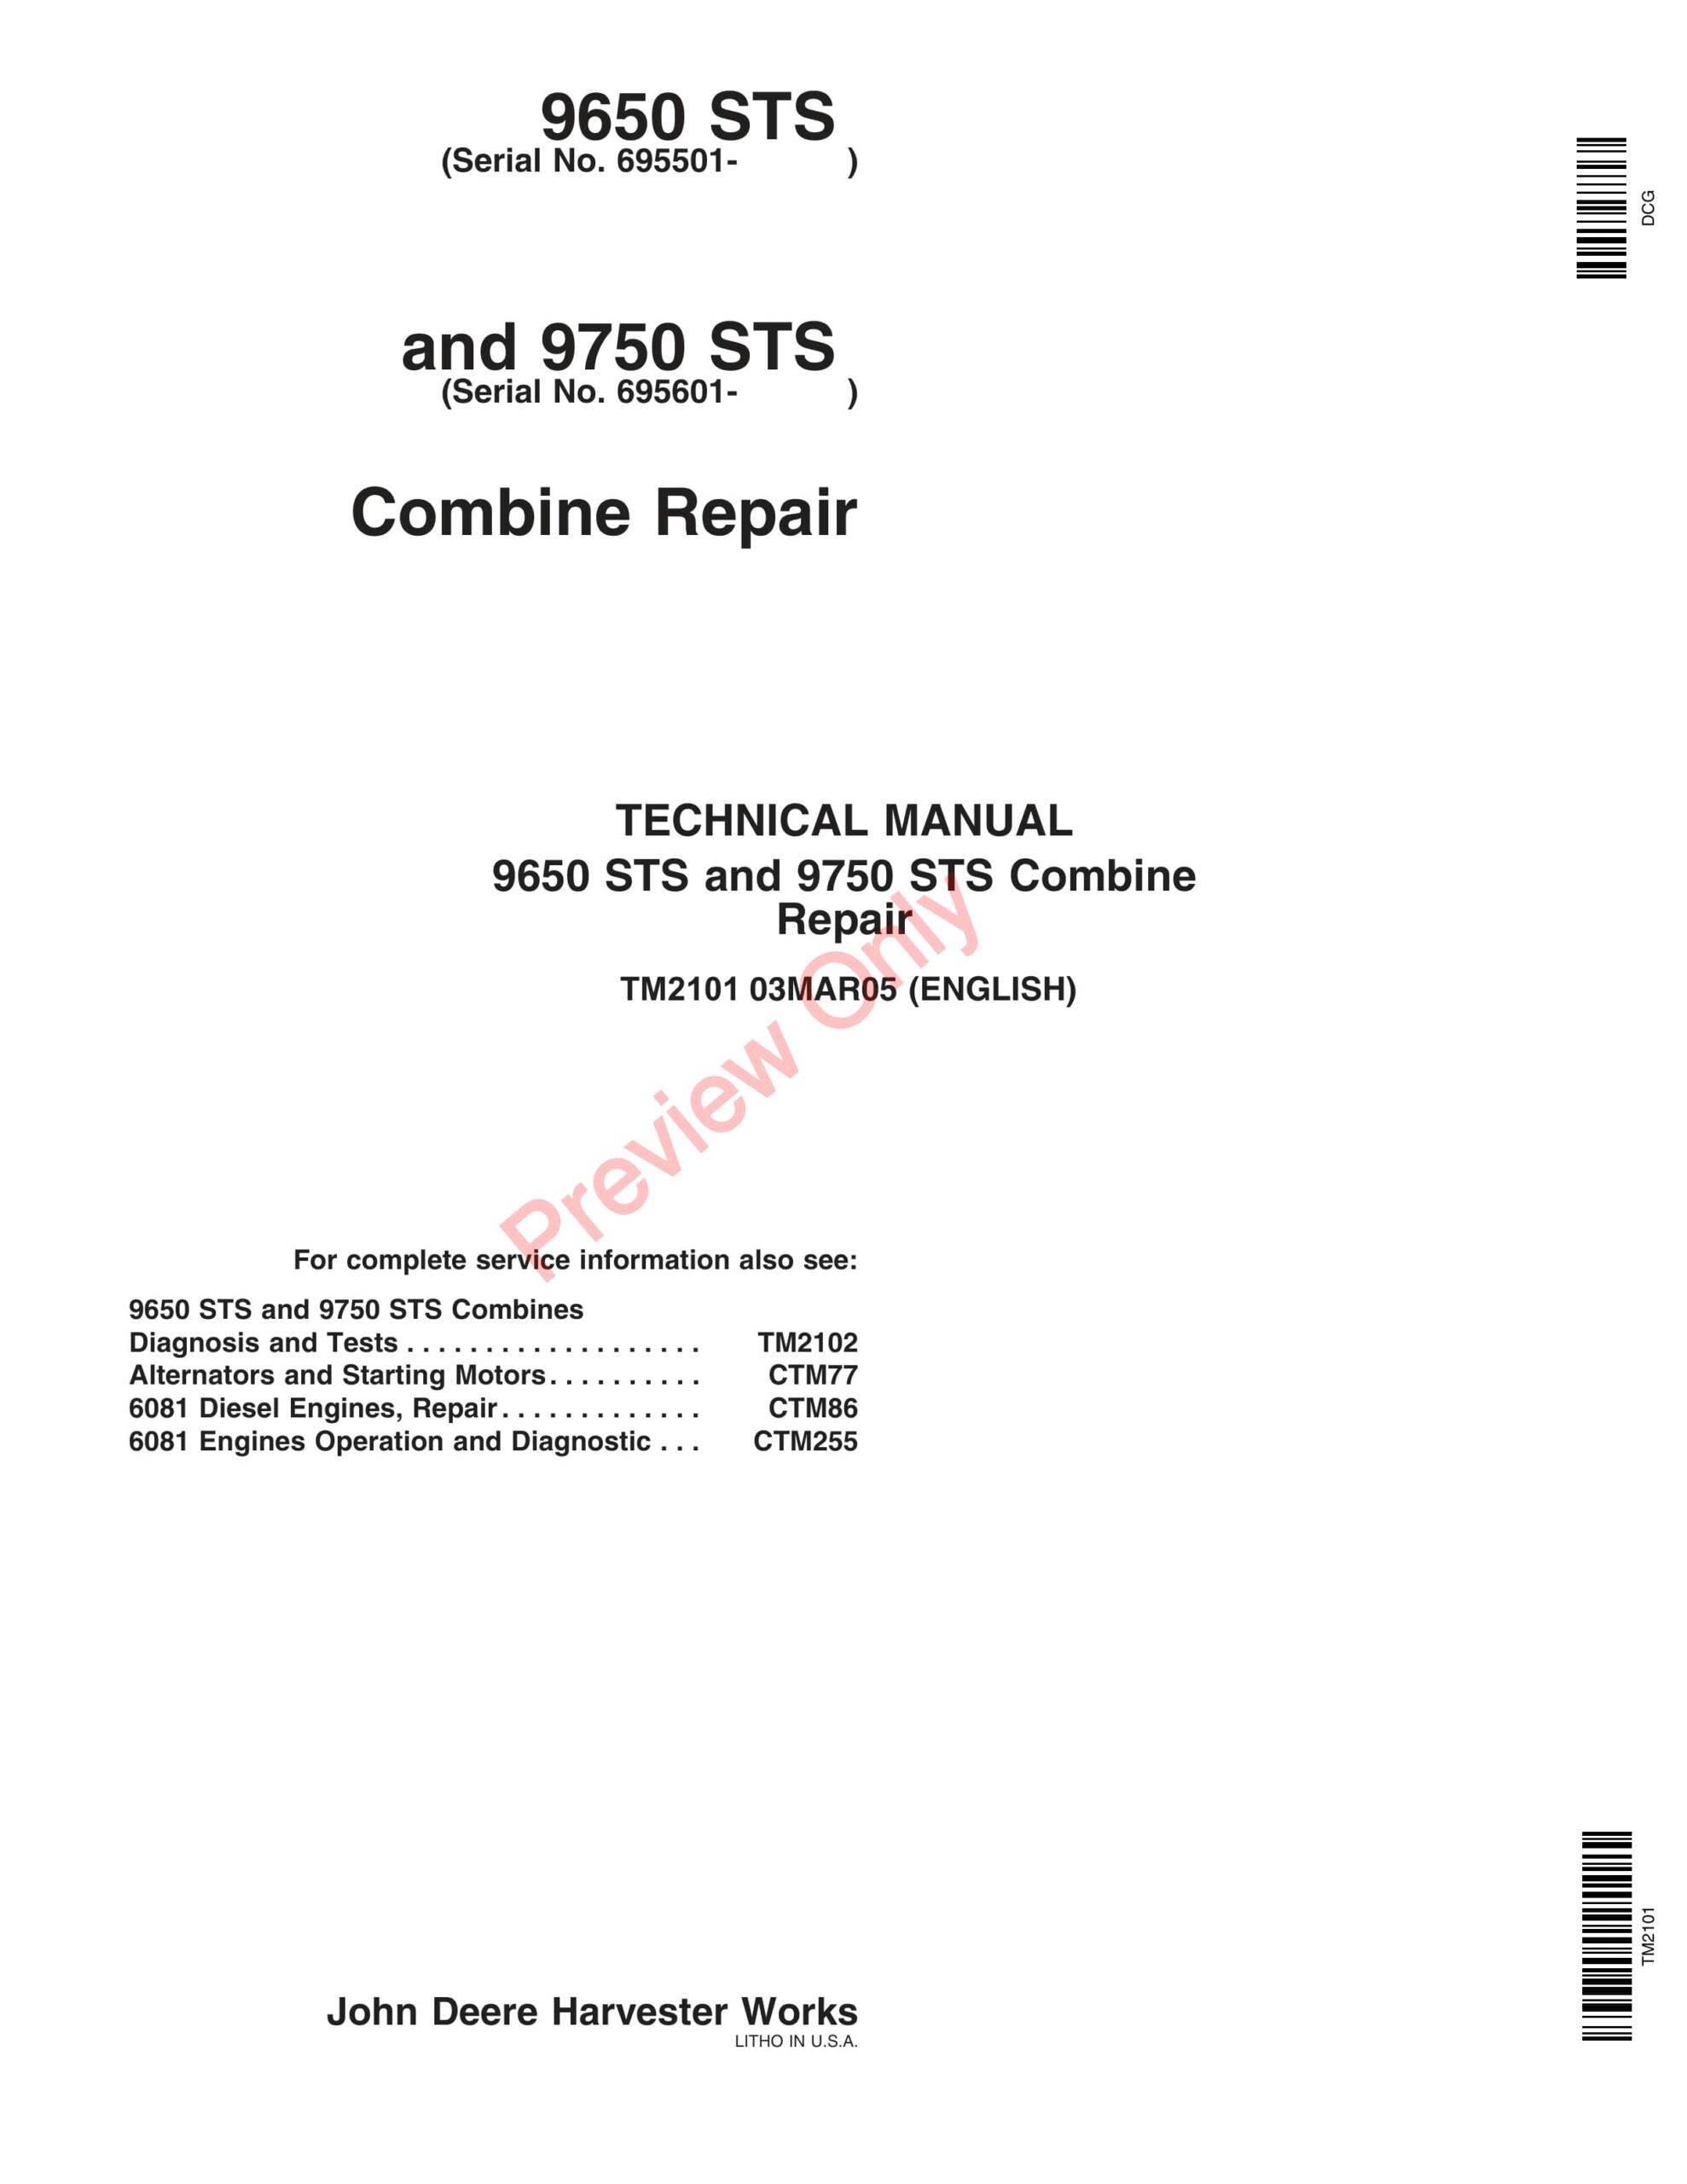 John Deere 9650 STS Combines (695501-), 9750 STS Combines (695601-) Technical Manual TM2101 03MAR05-1